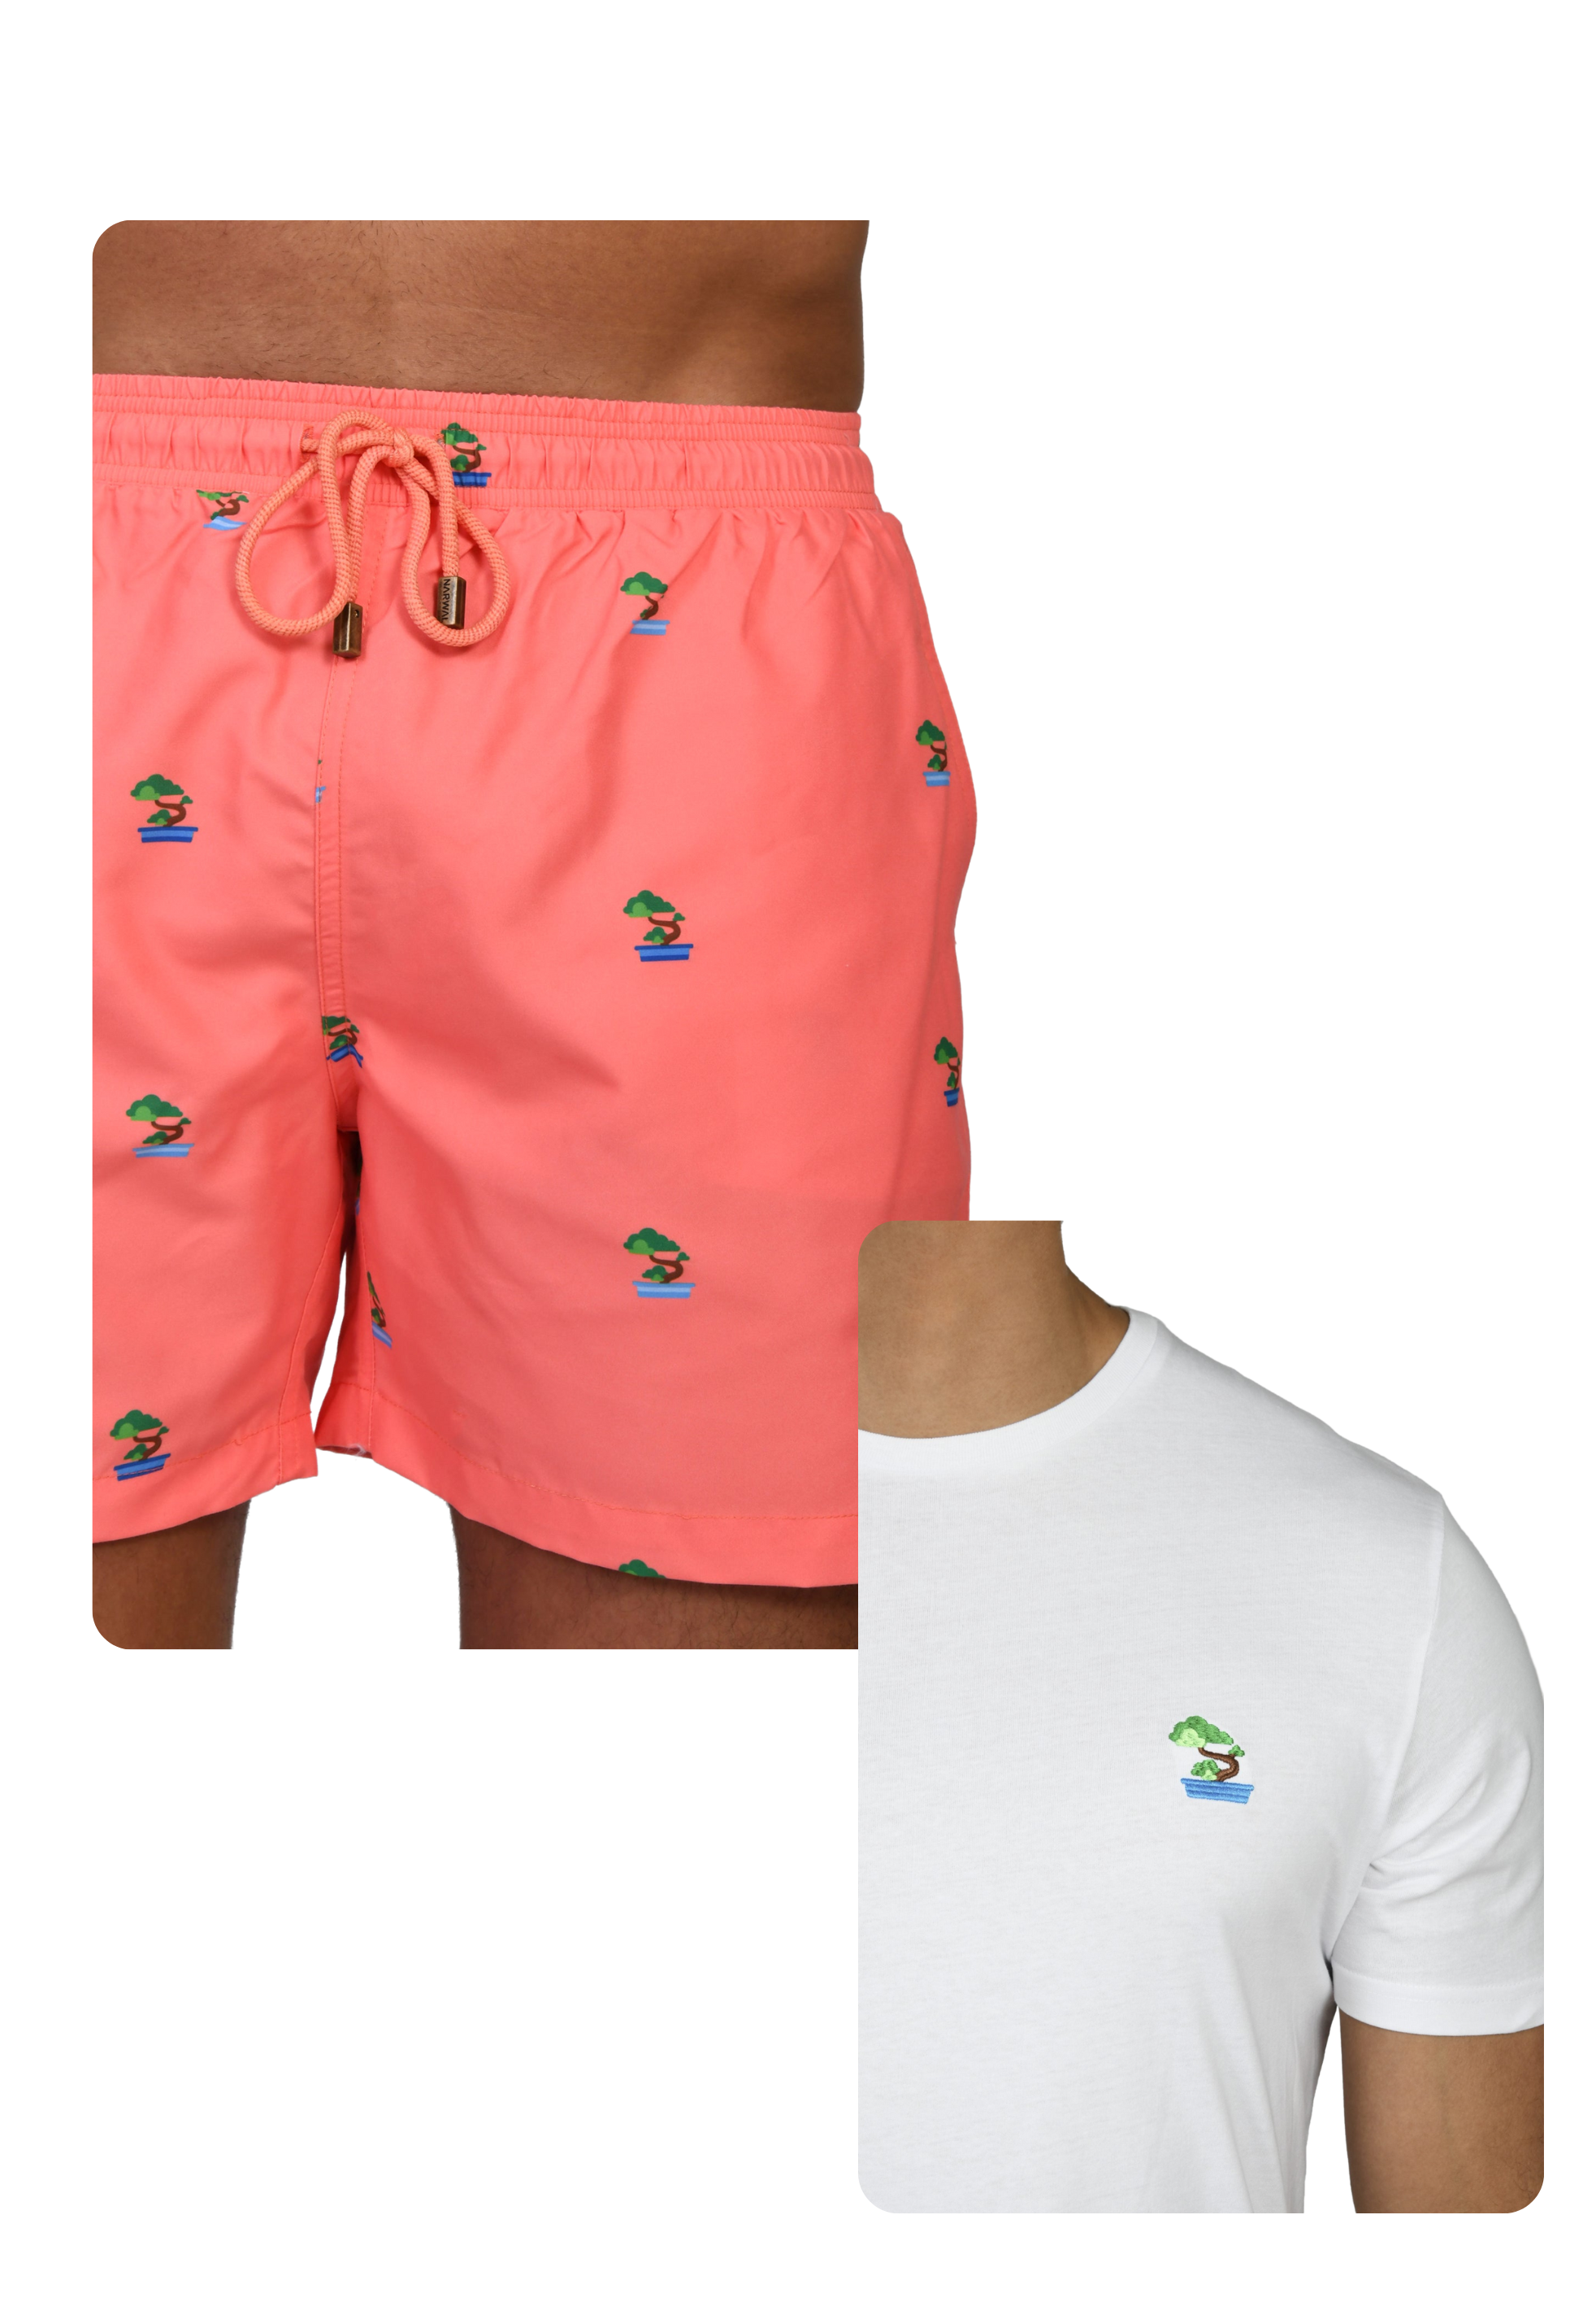 Bonsai Swim Trunks and T-shirt Bundle